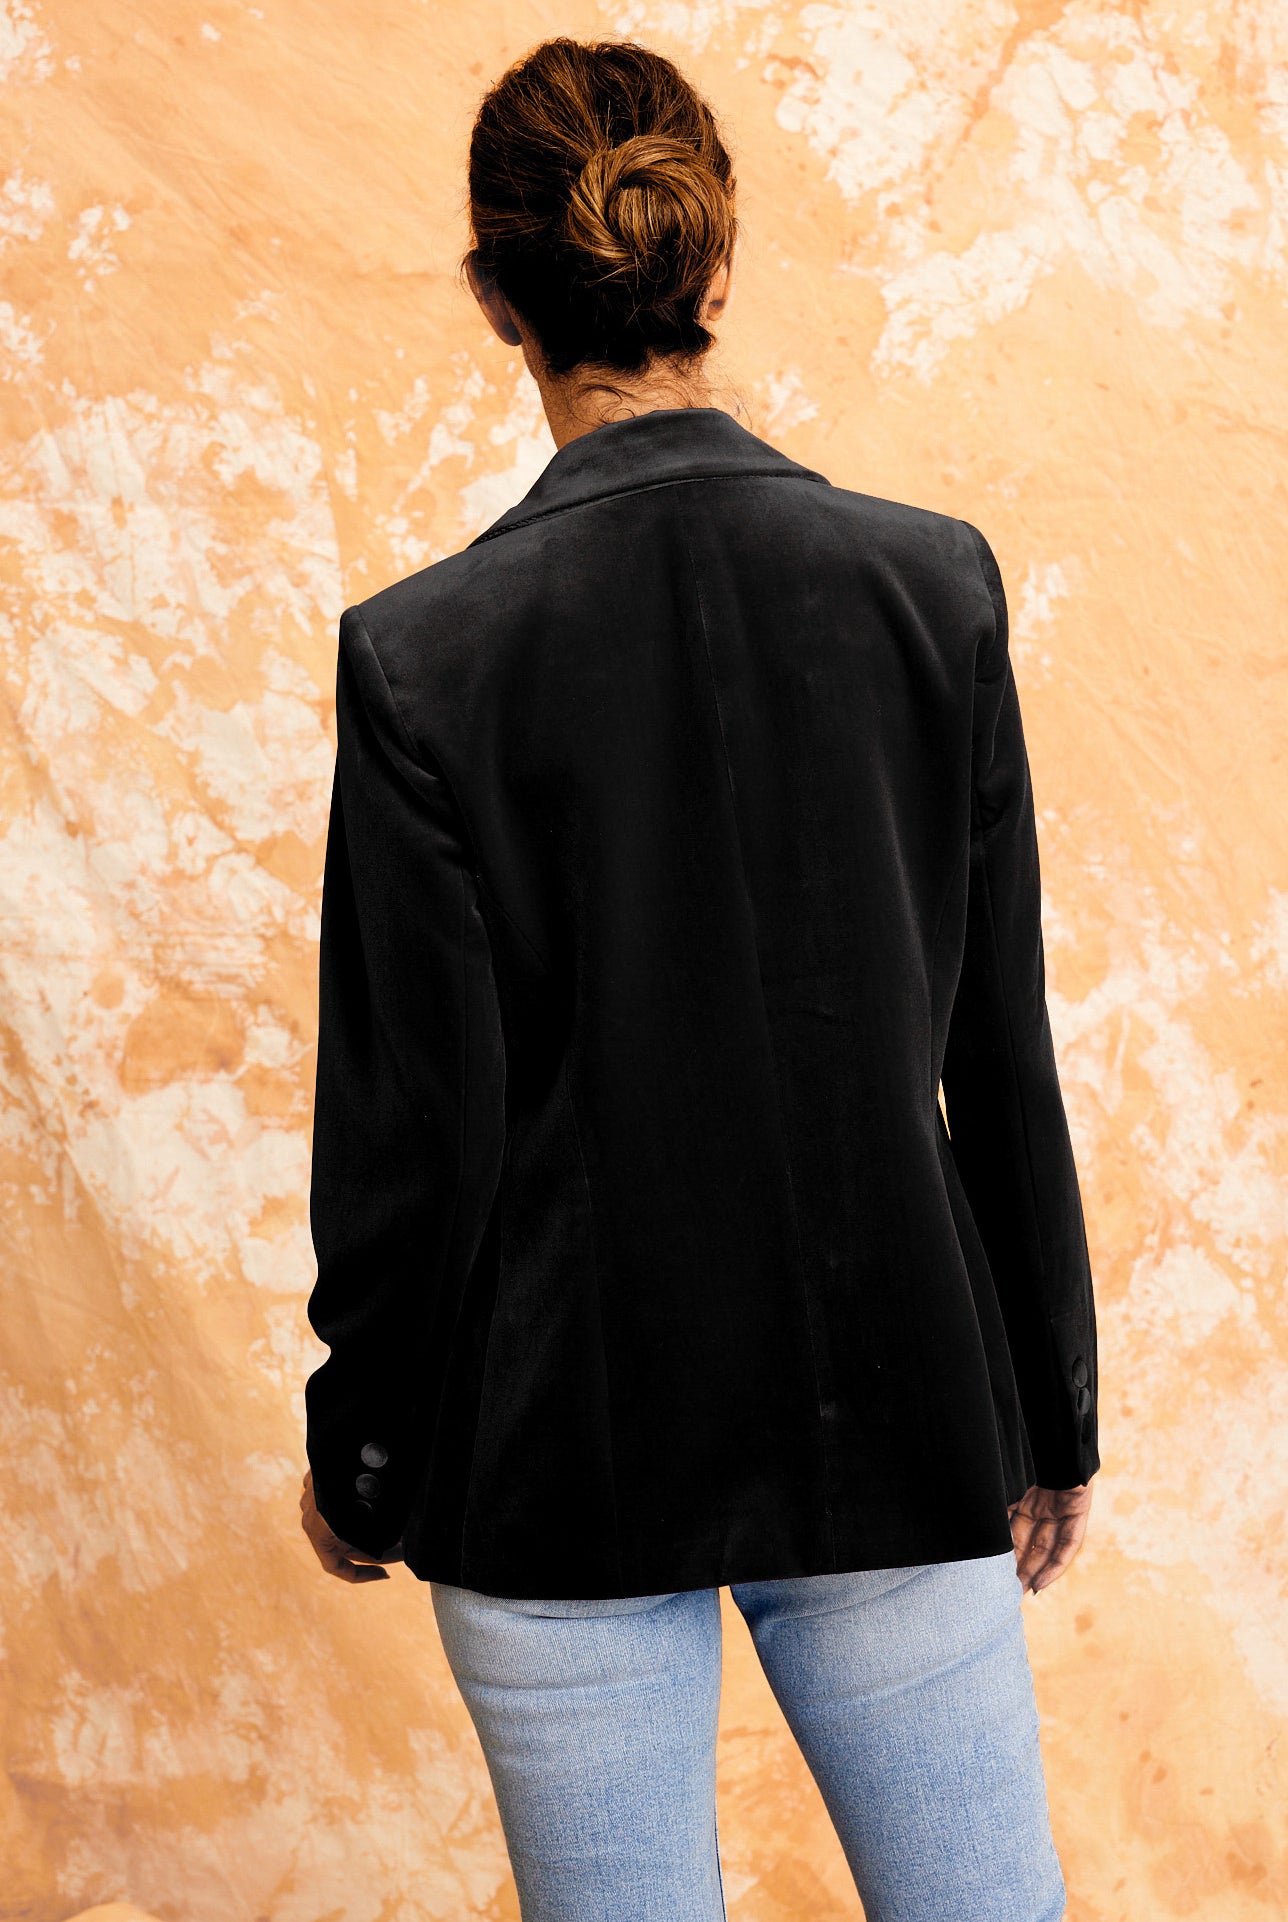 KAMARE - Surry Jacket Black - Magpie Style